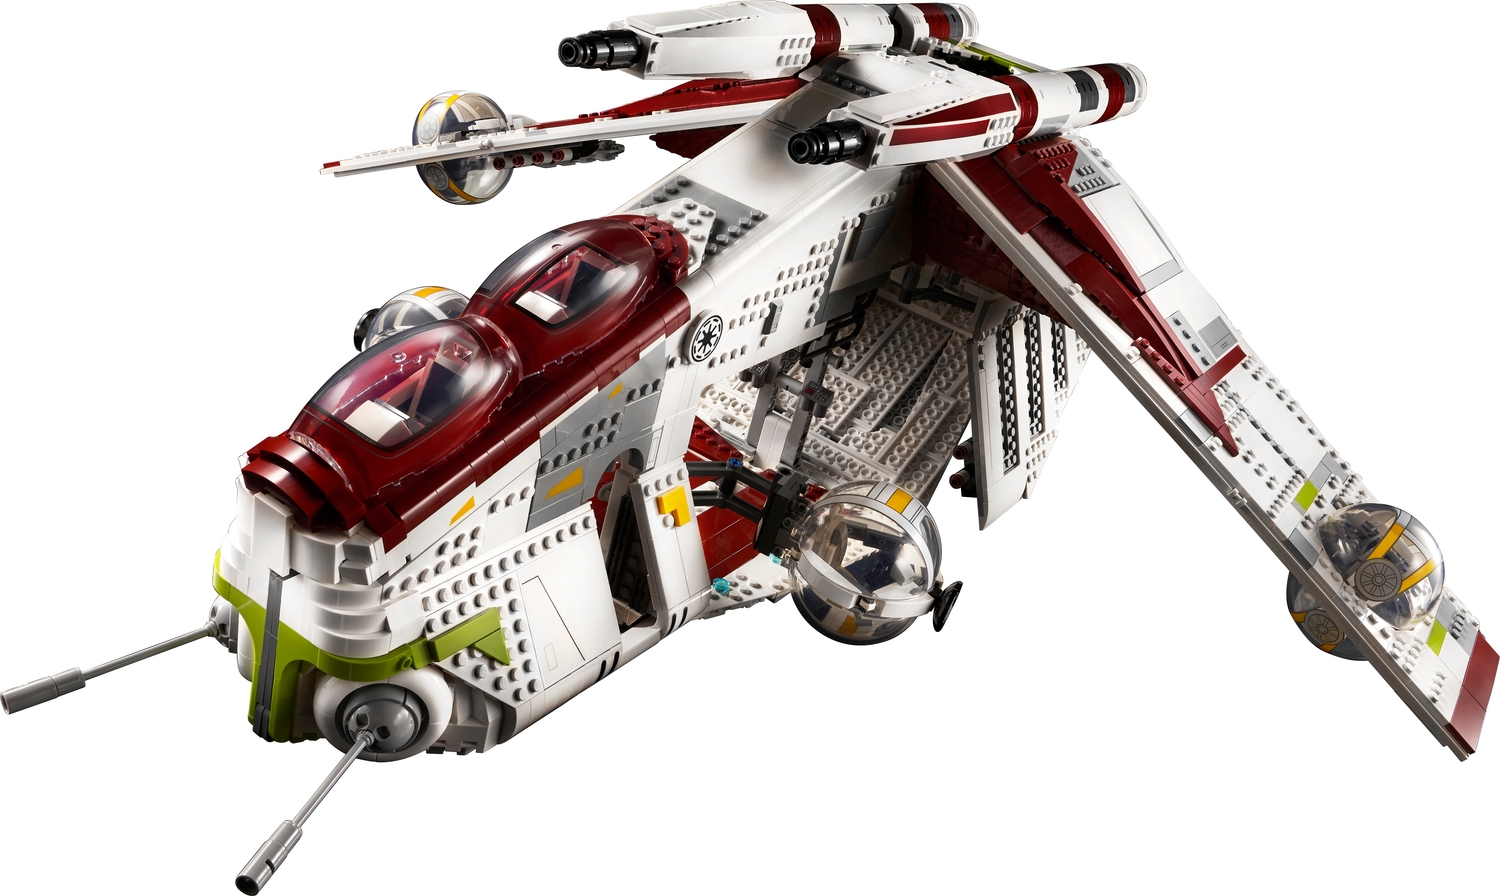 LEGO Star Wars: Republic Gunship That Toys